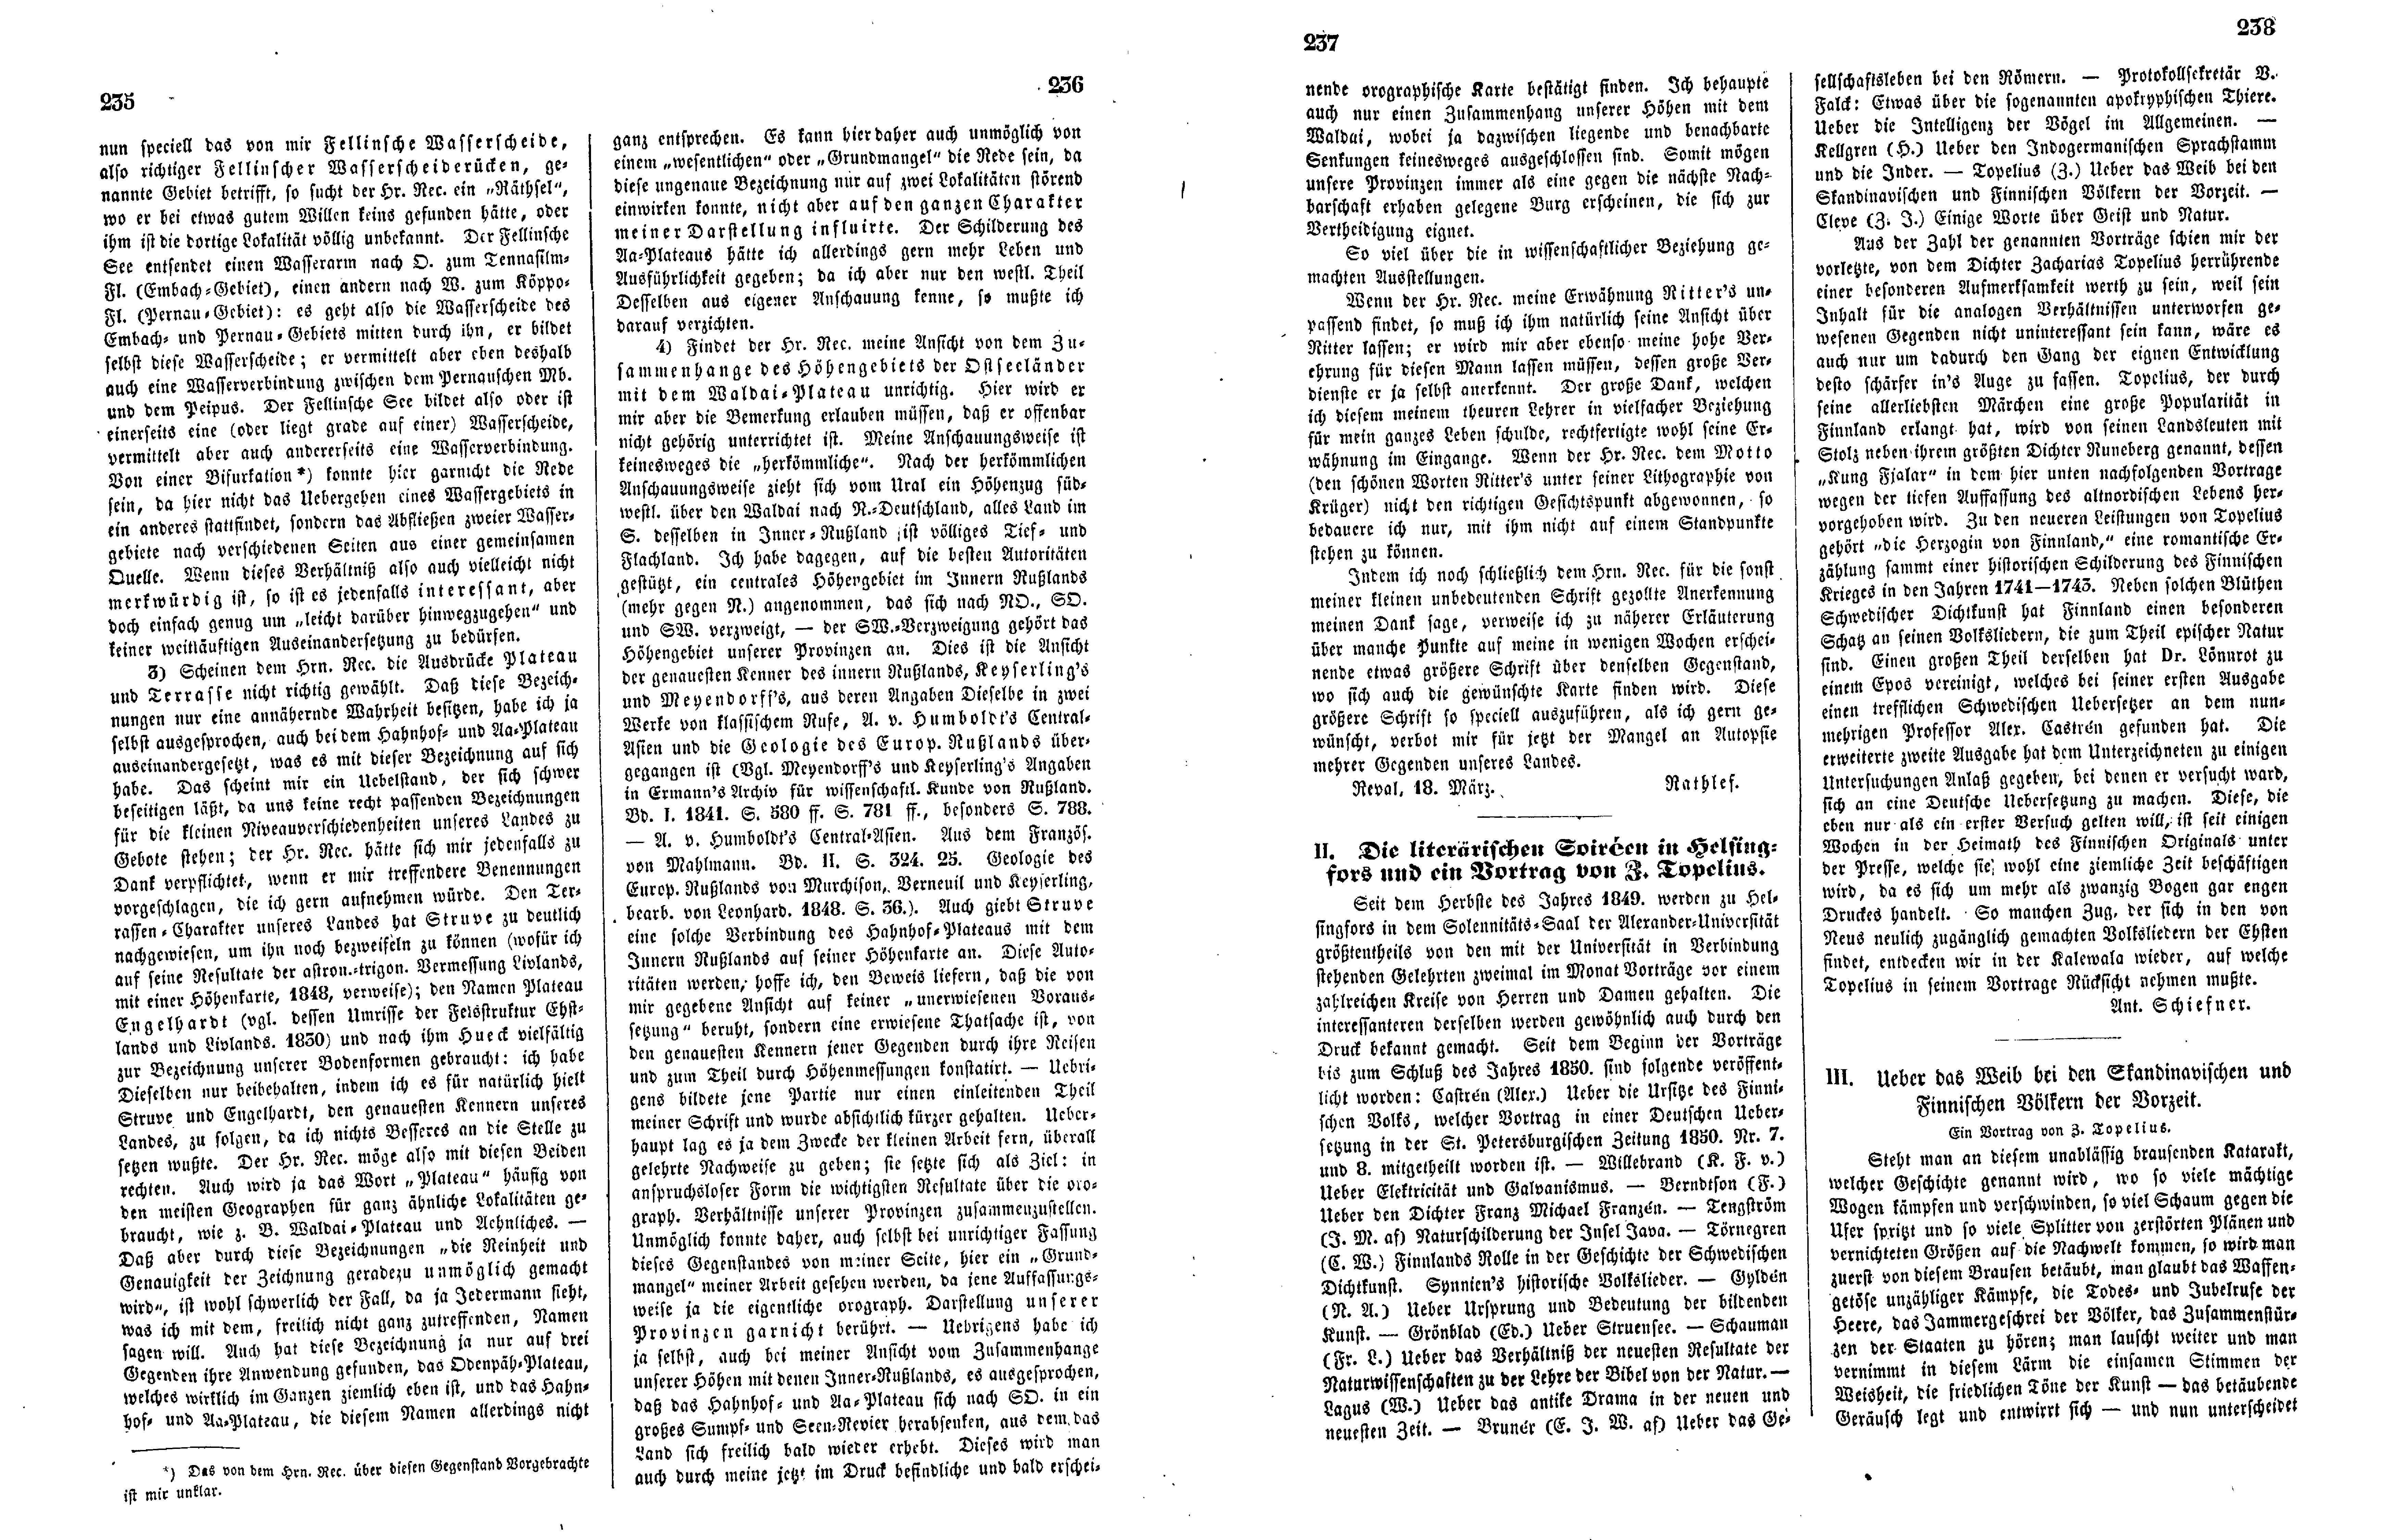 Das Inland [17] (1852) | 63. (235-238) Main body of text